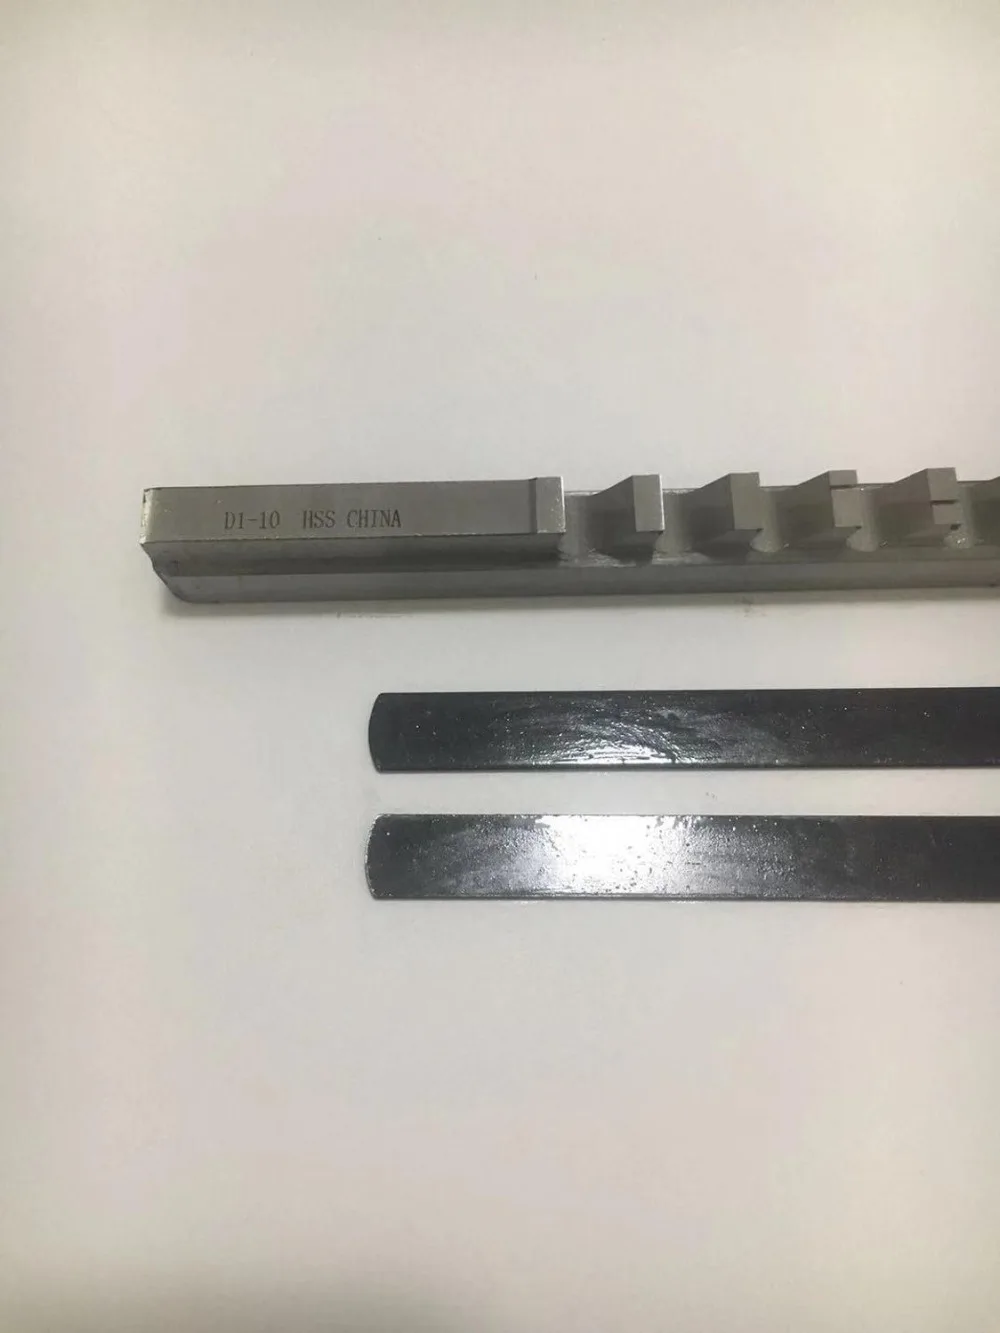 Keyway-Broach-Cutting-Tool-Metric-Size-10mm-D-Push-Type-with-Shim-HSS-Broaching-Cutting-Tool (2)